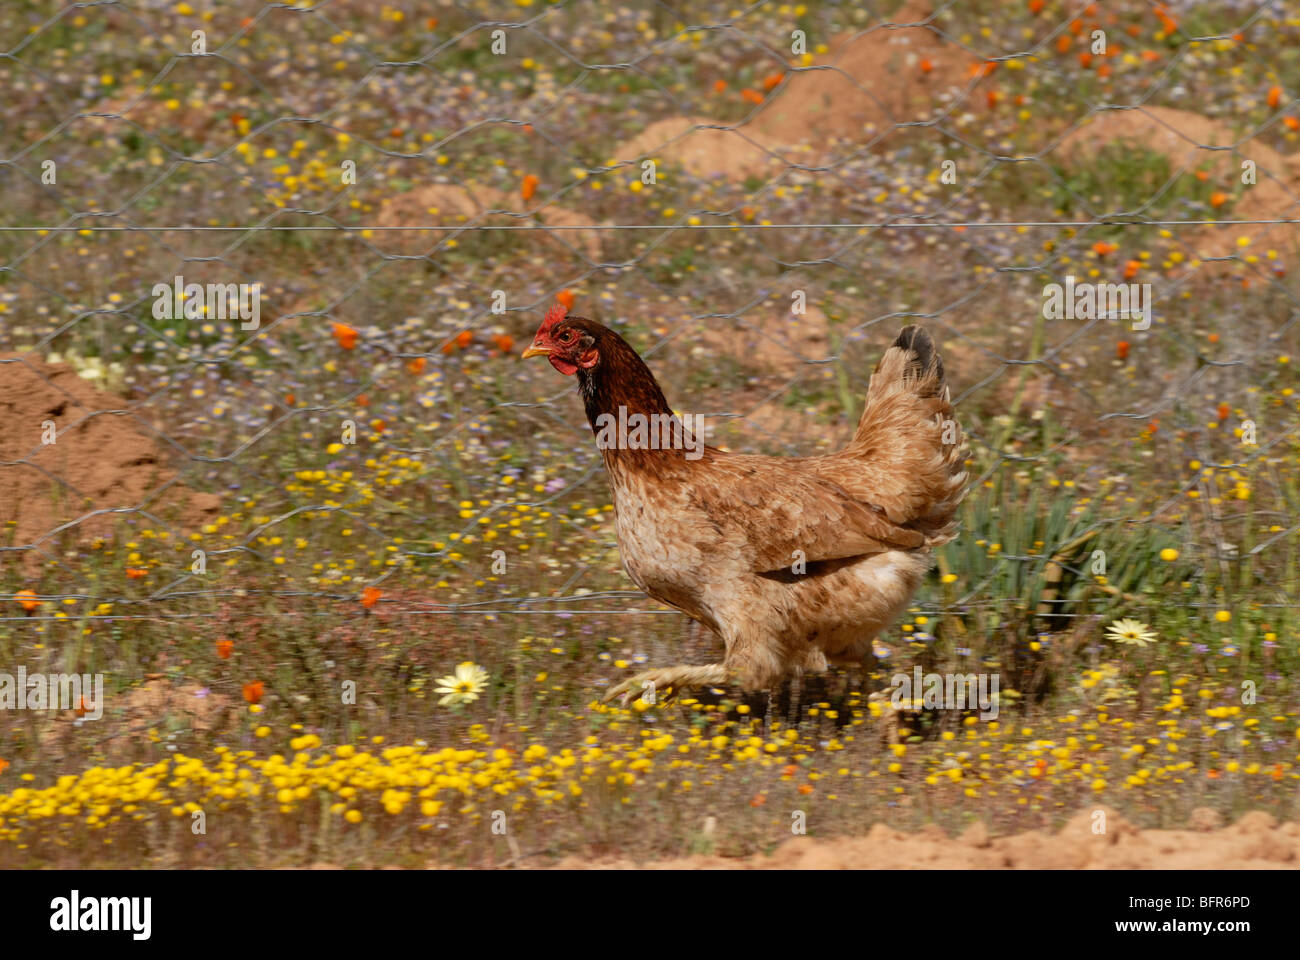 Chicken running amongst flowers Stock Photo